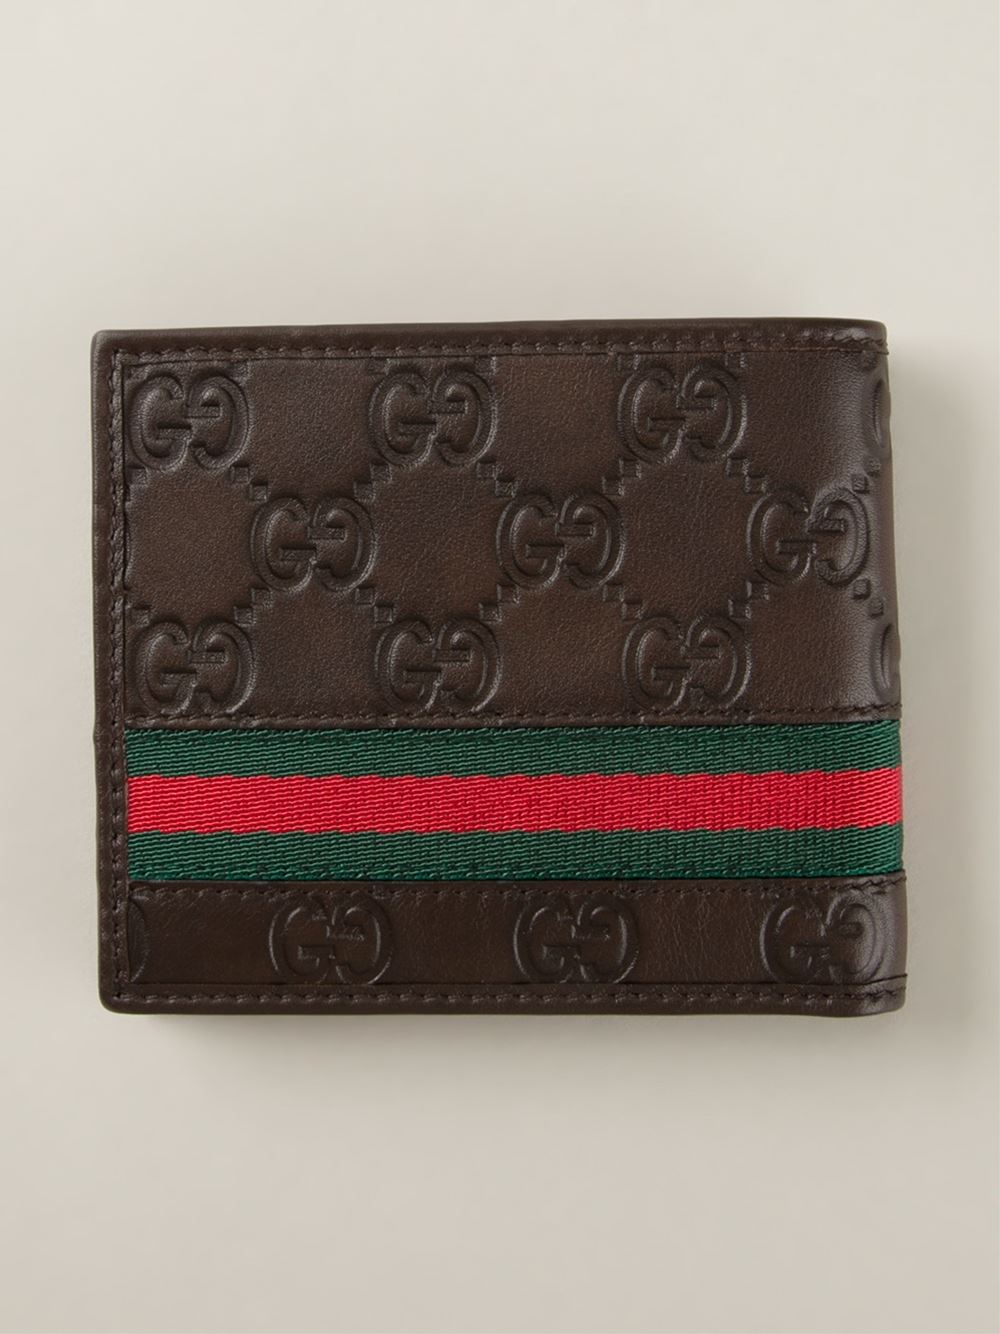 Gucci Logo Wallet | The Art of Mike Mignola